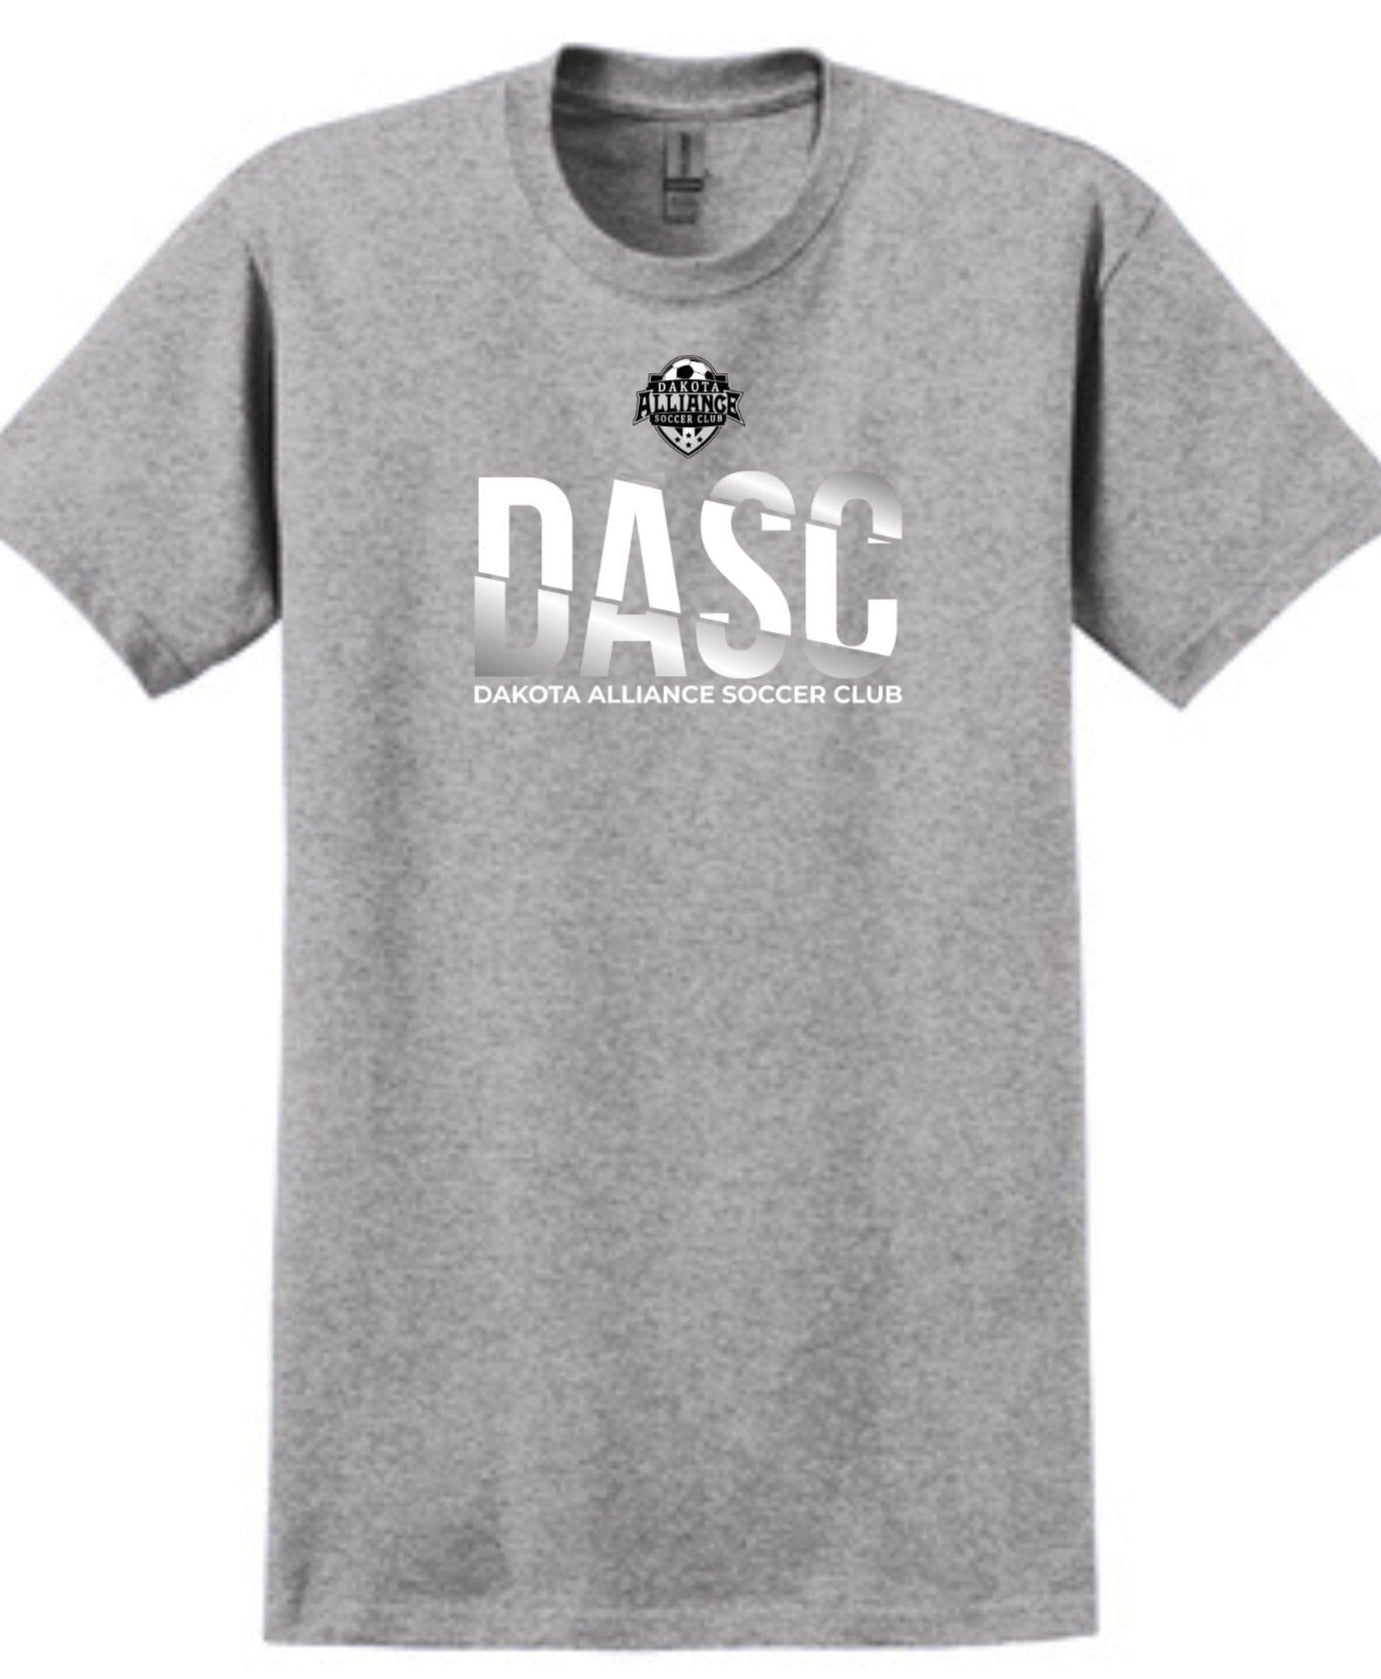 DASC Men's/Unisex Cotton T-Shirt - Fan Gear Shirt Gildan Men's Small Sport Grey DASC Horizontal